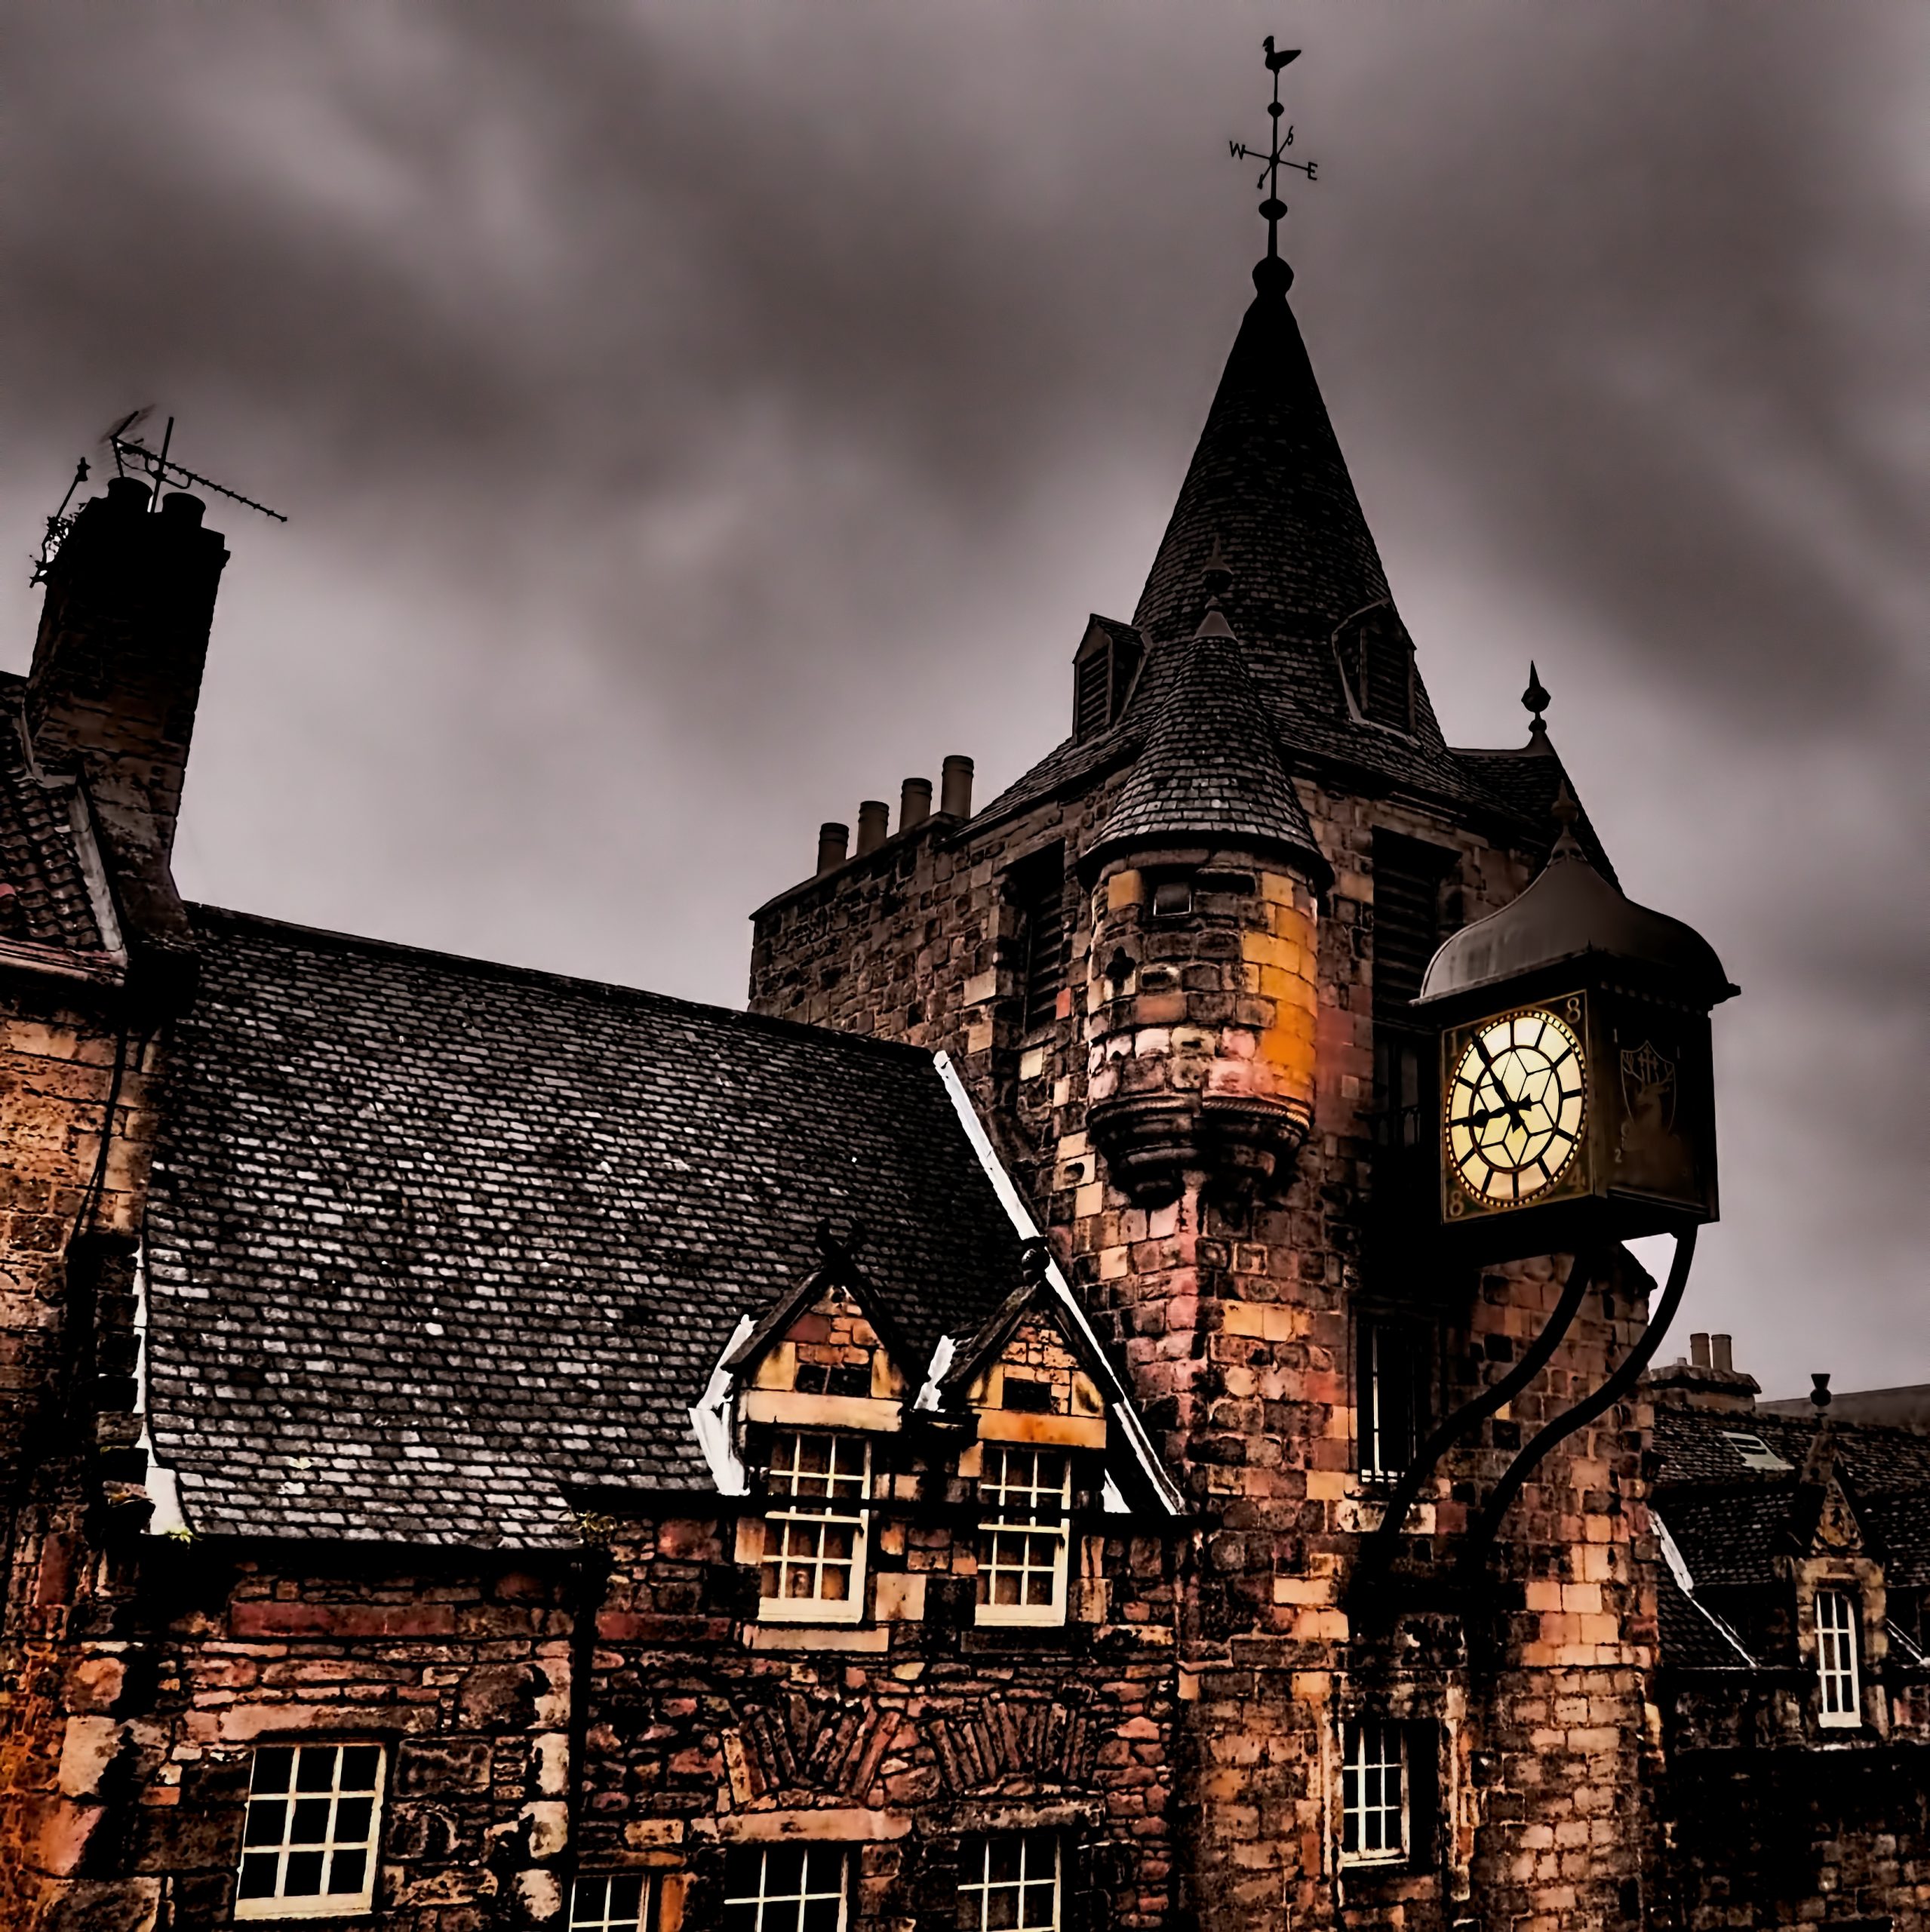 Edinburgh's Tolbooth Tavern Clock Tower at night